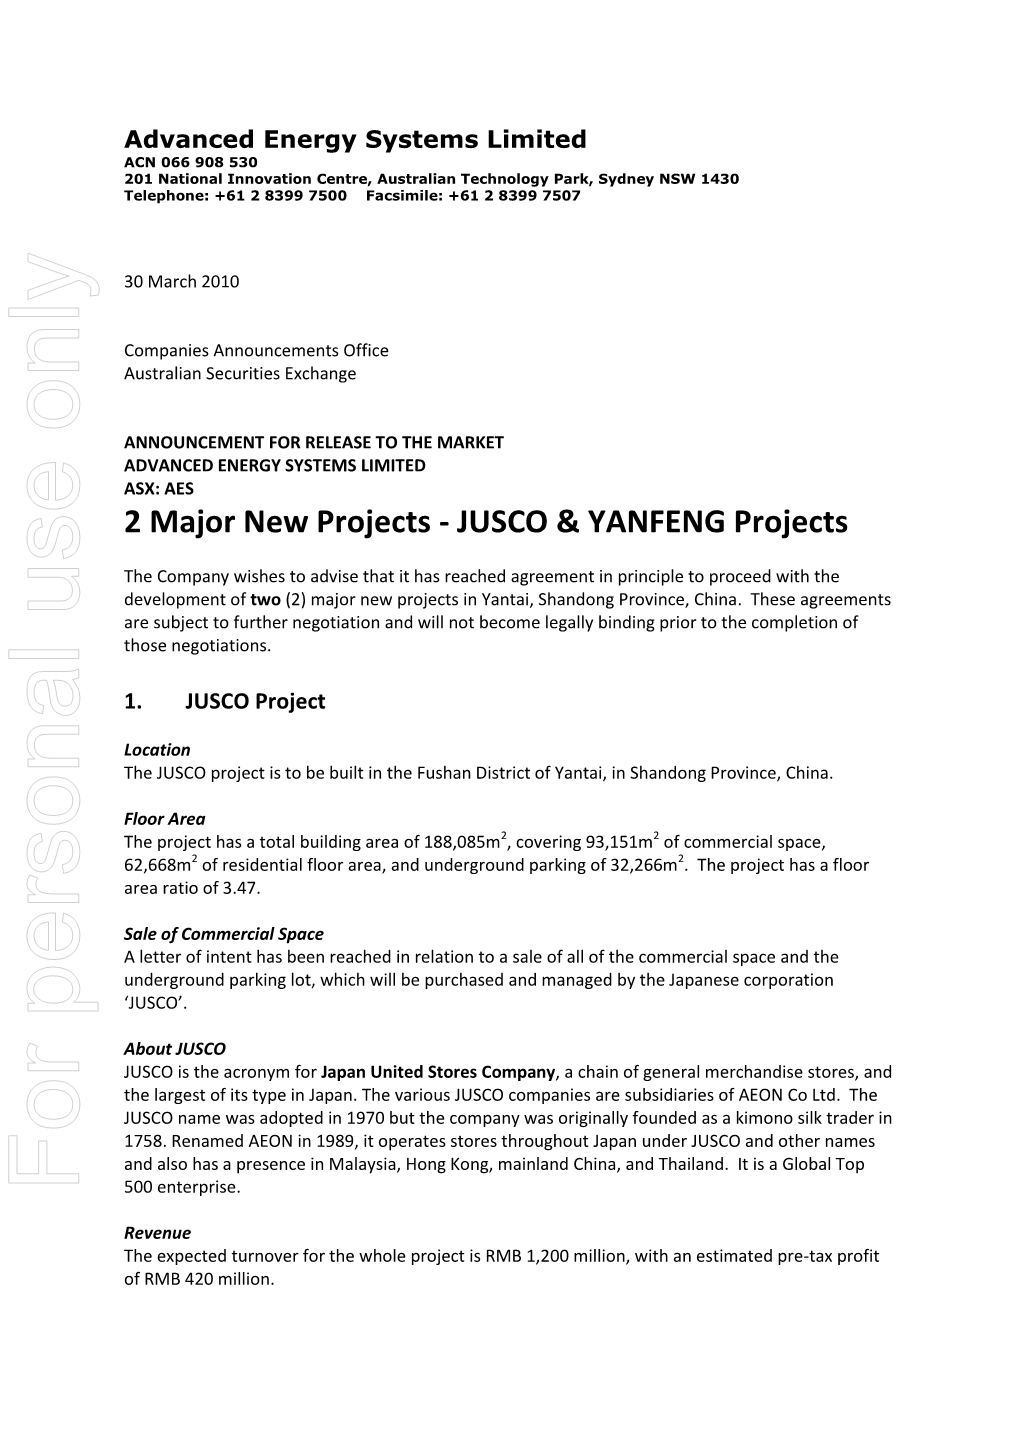 JUSCO & YANFENG Projects